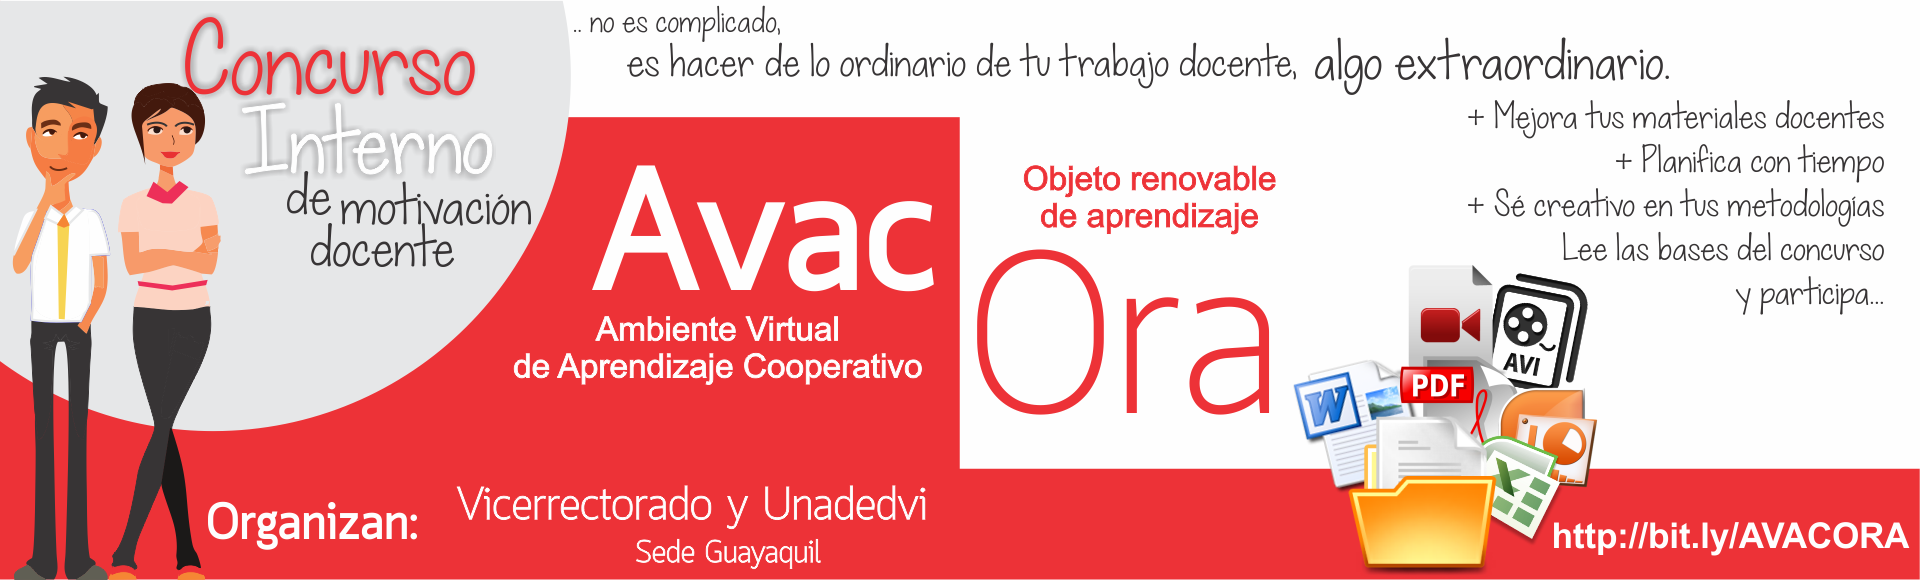 logo de Avacora